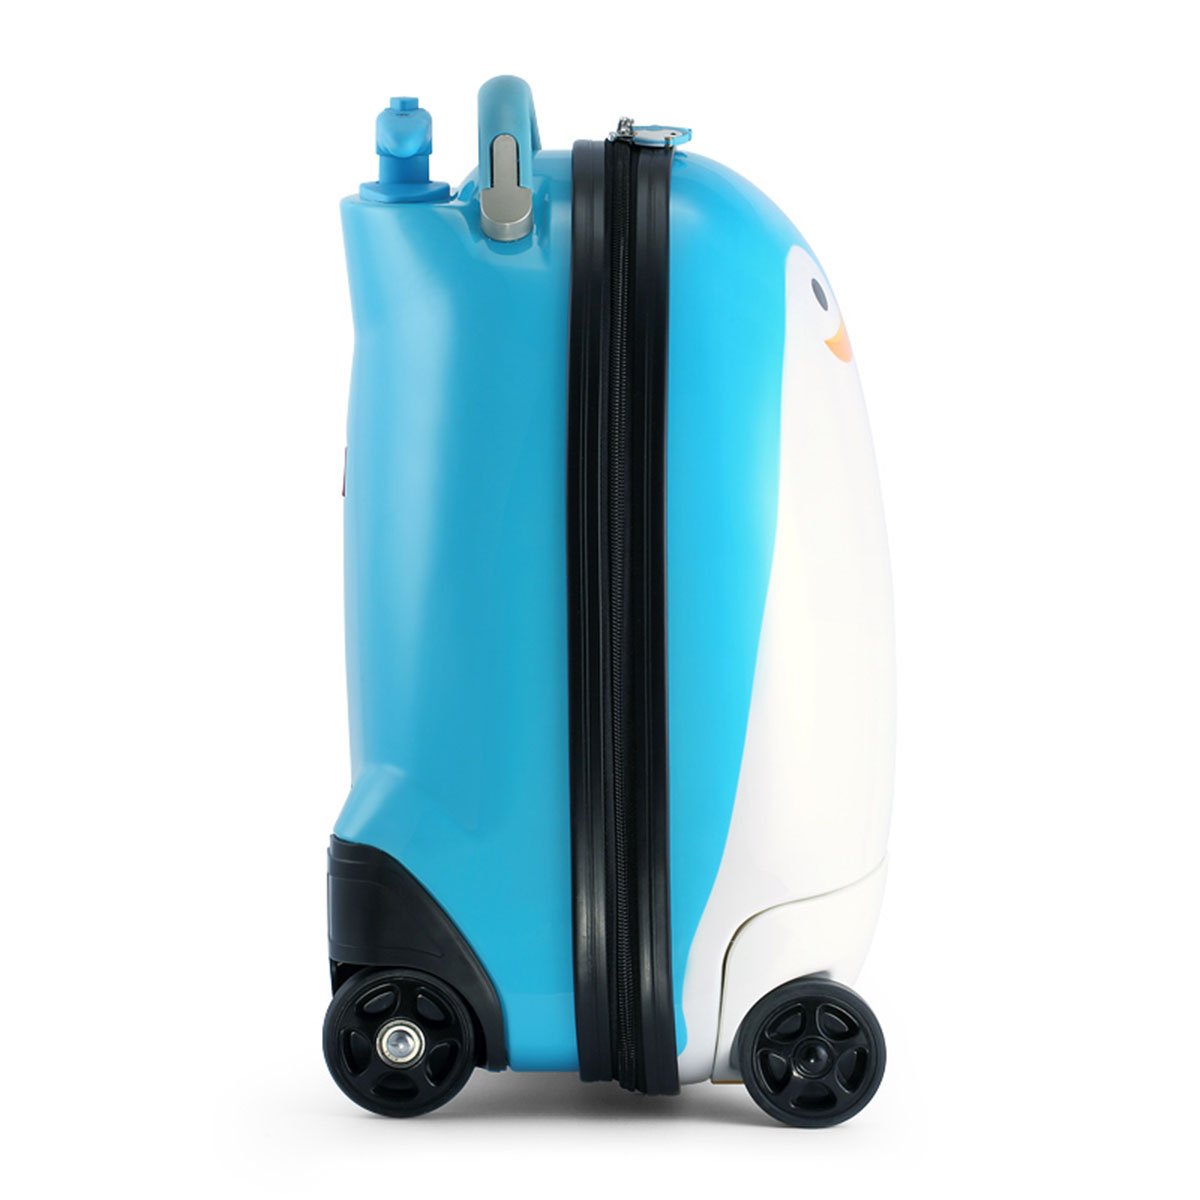 Backpack de Pinguino Color Azul Vester